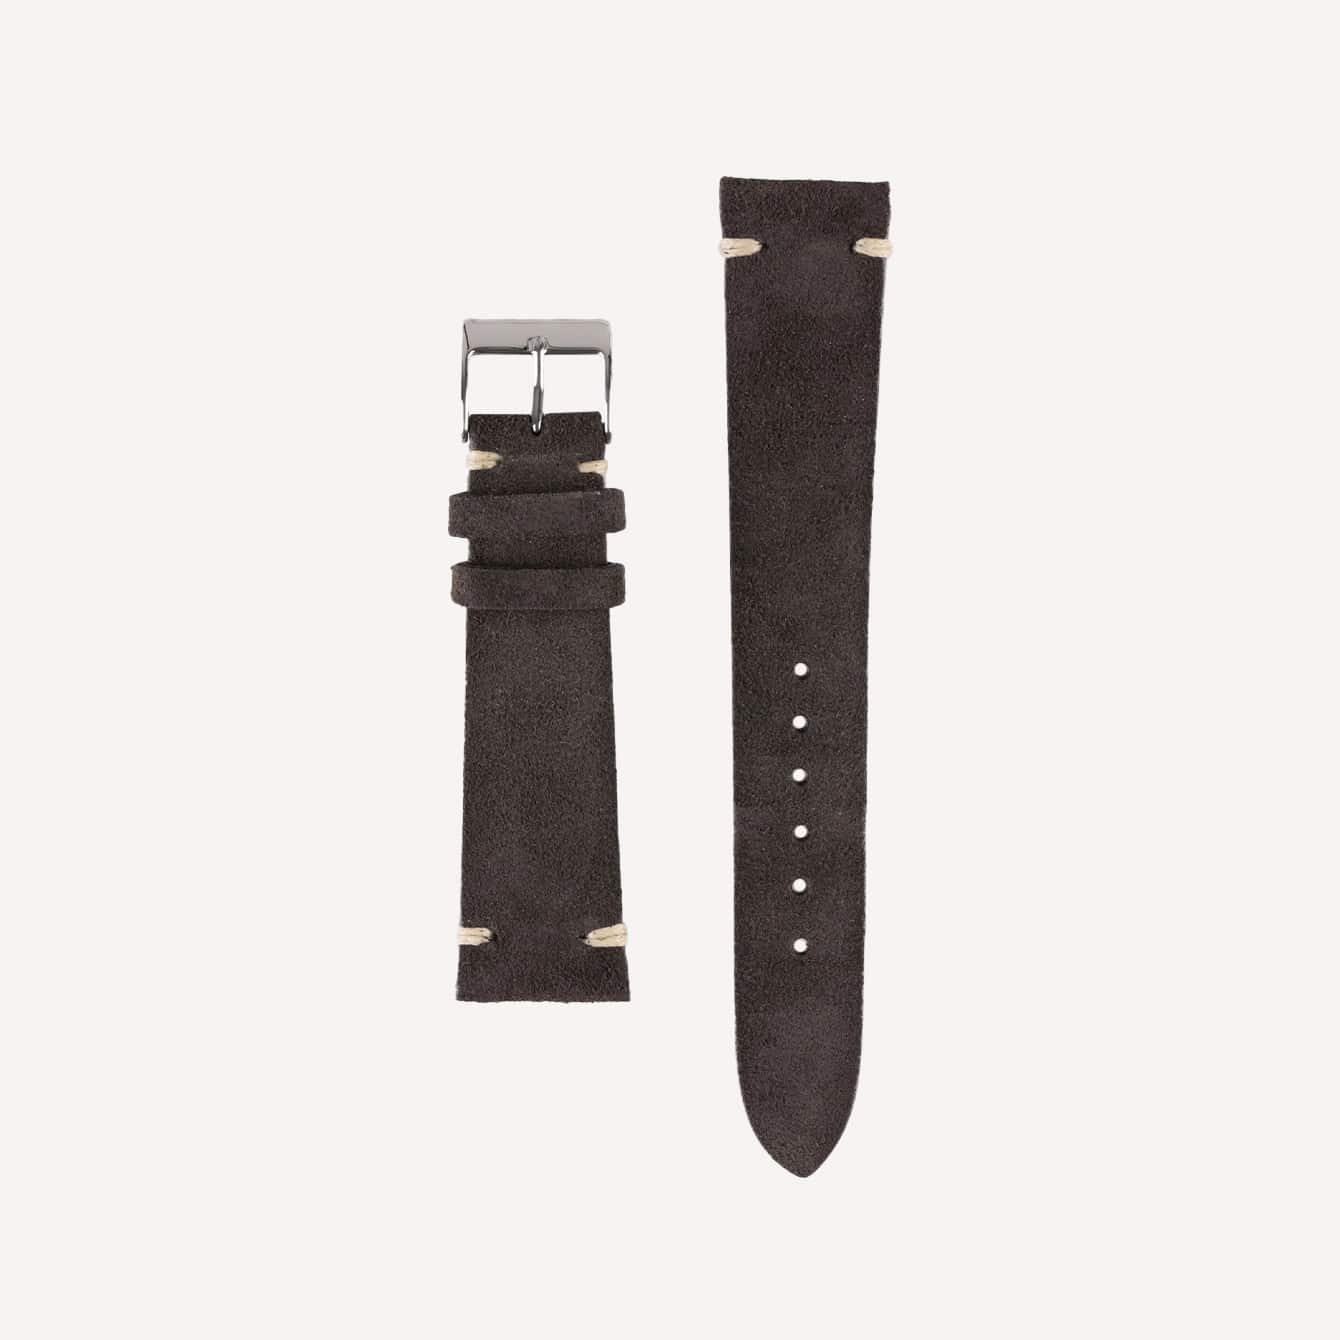 JPM Italian Vintage Leather Watch Strap